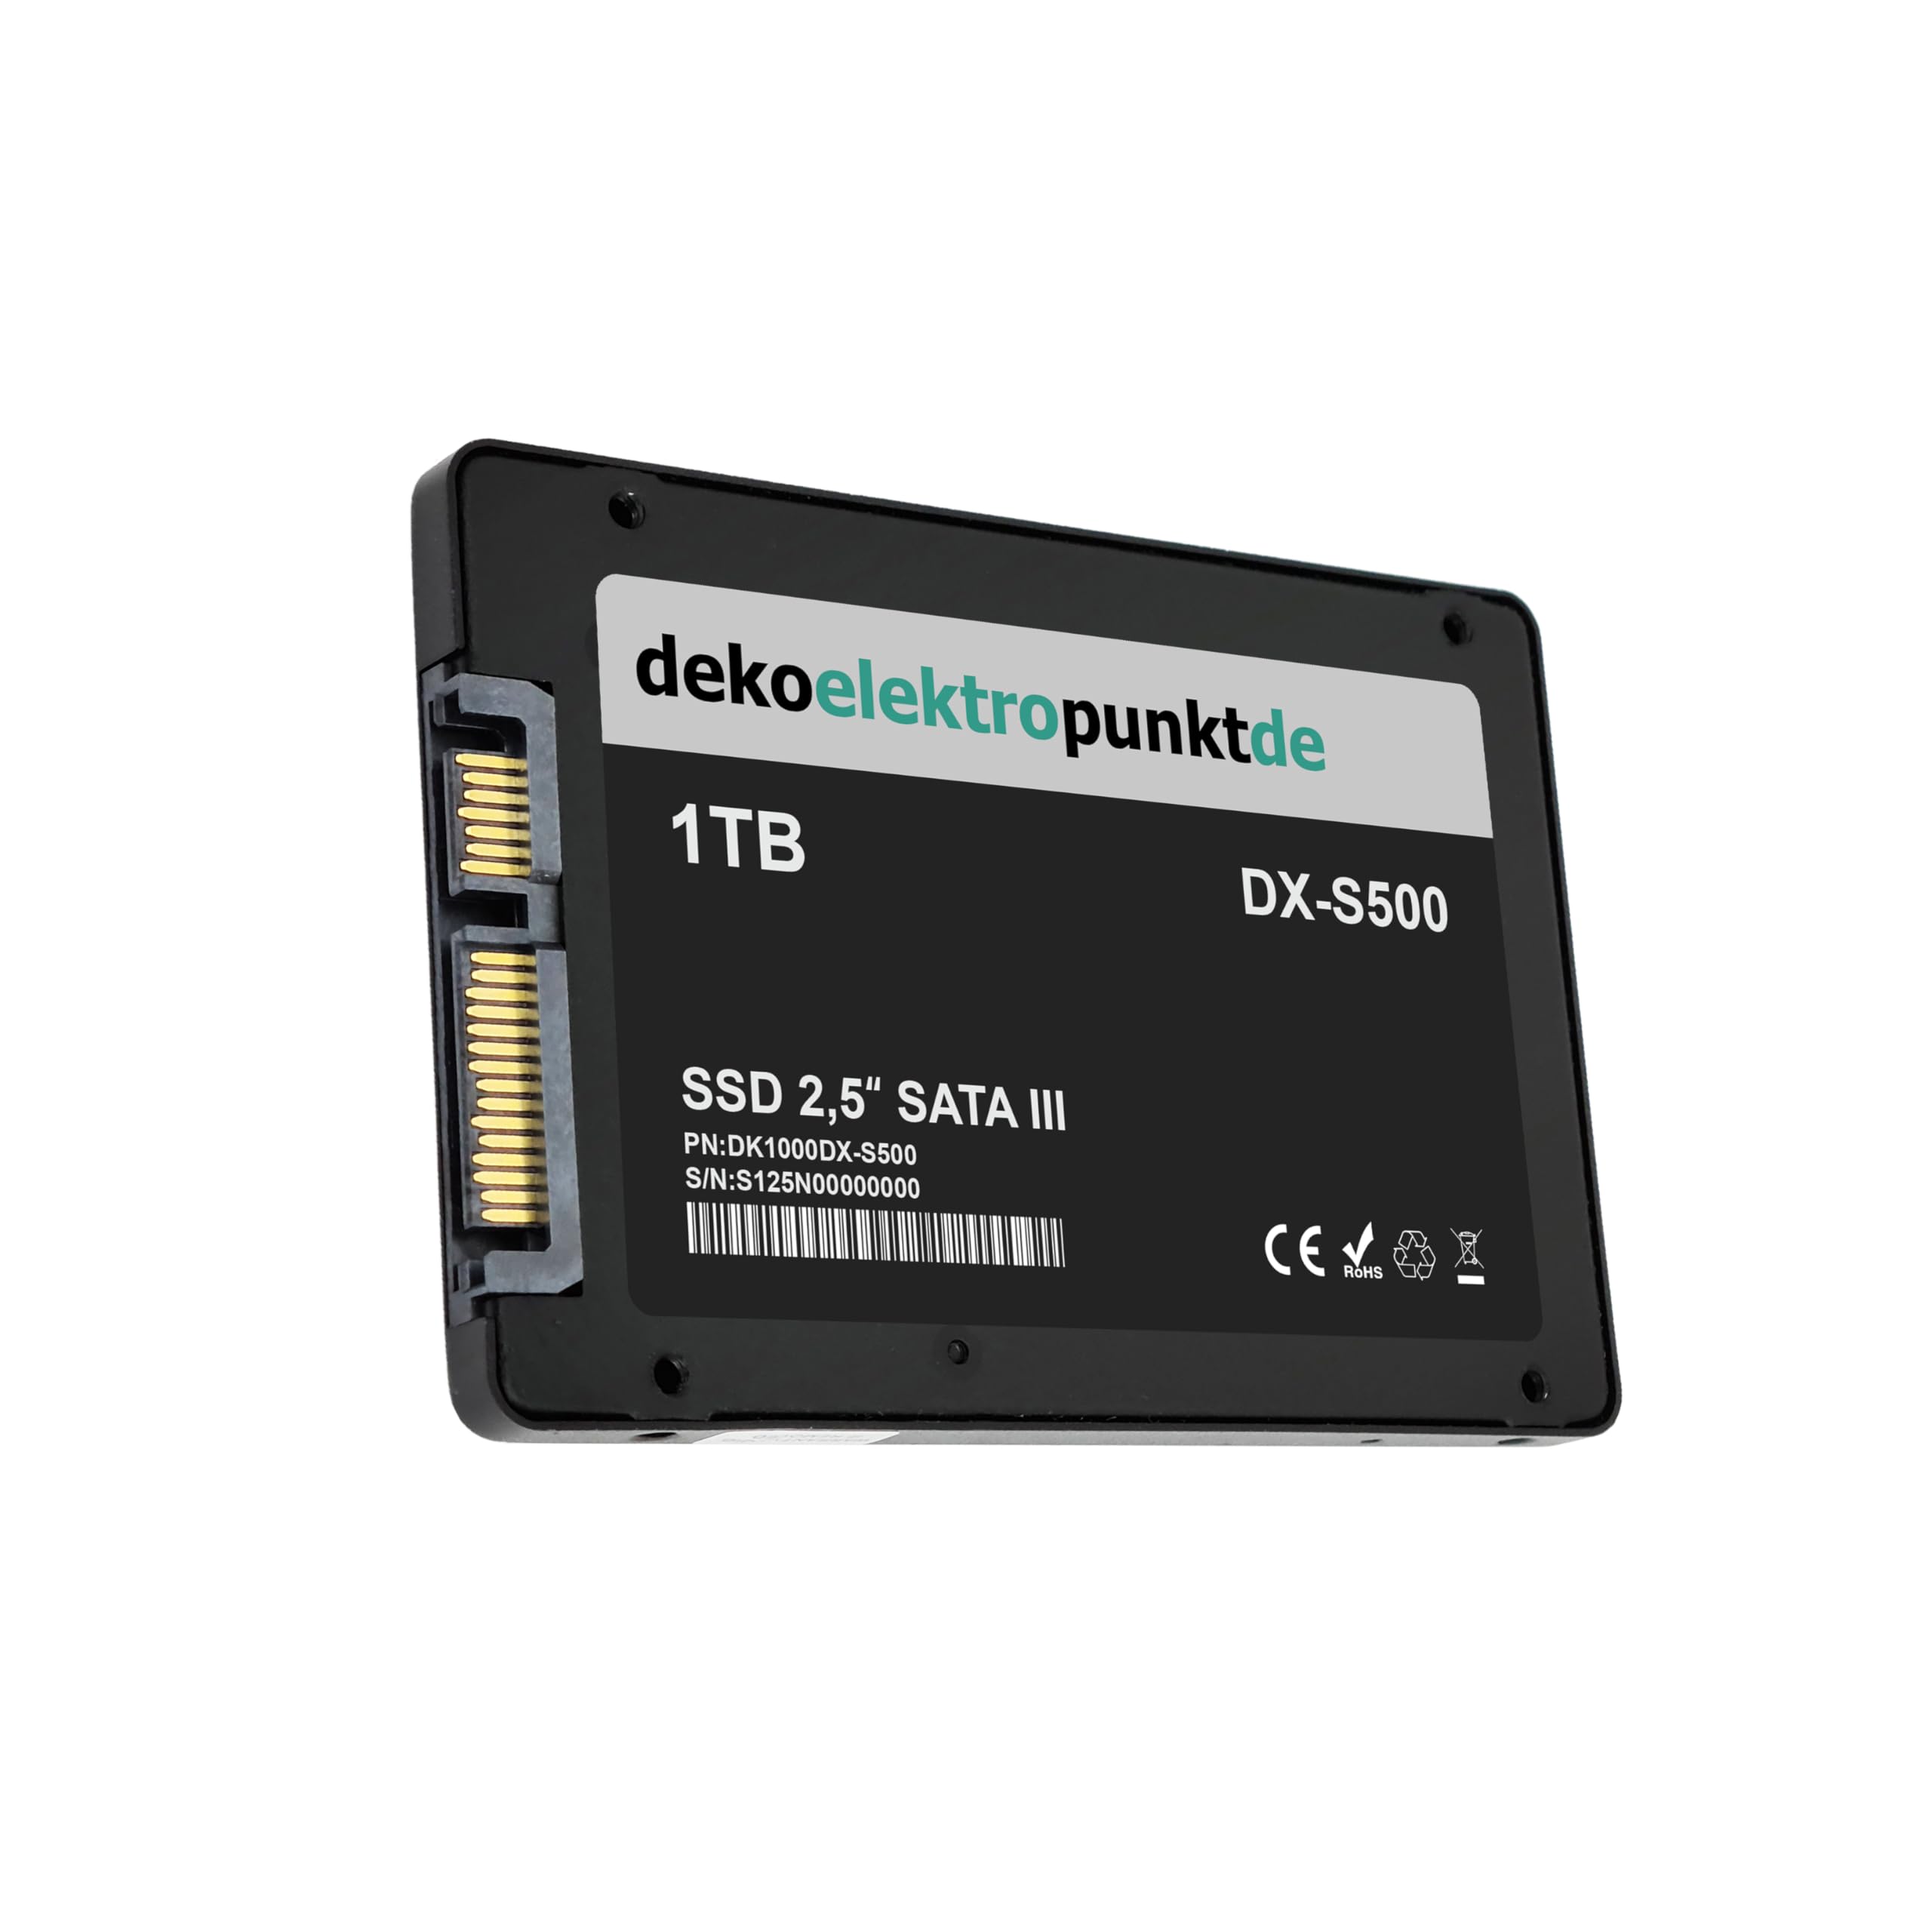 dekoelektropunktde 1TB SSD Festplatte kompatibel mit Fujitsu Siemens Amilo M1450G V2085 Pi2550